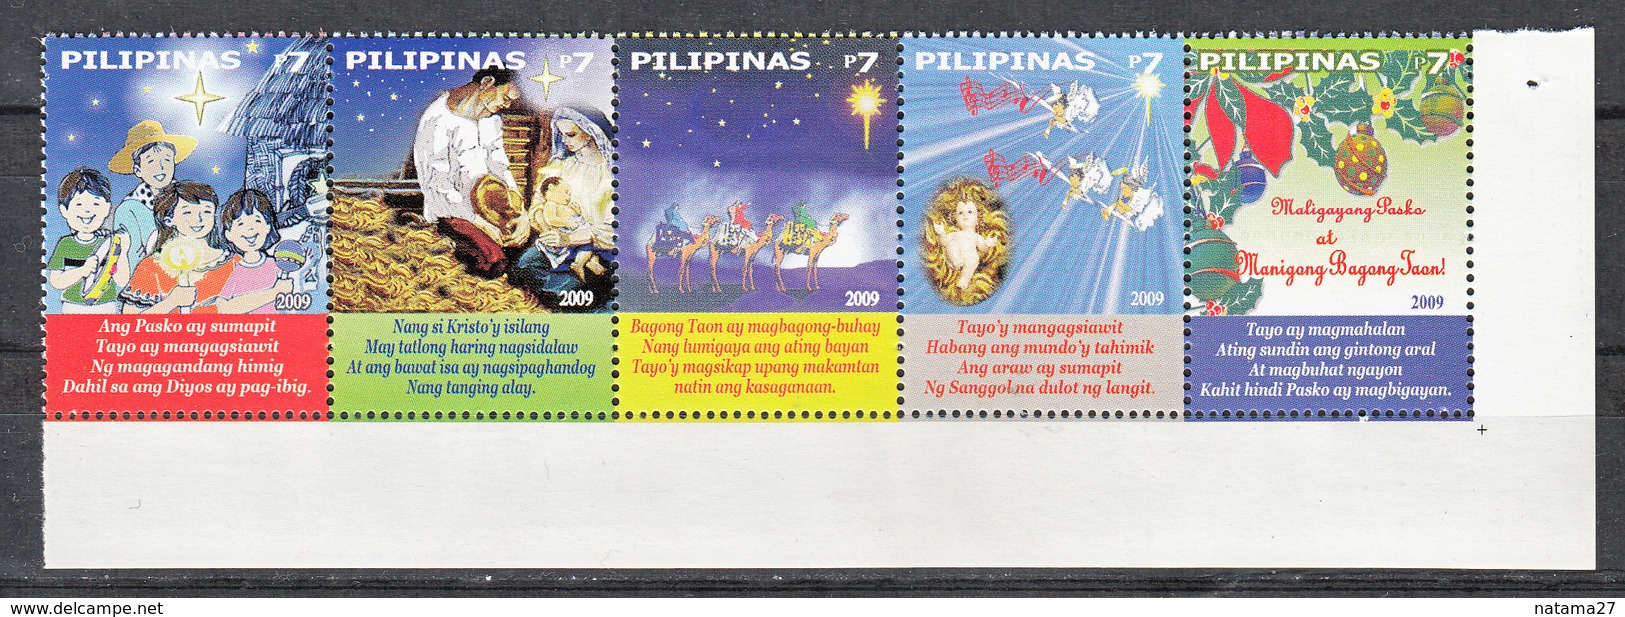 Filippine Philippines Philippinen Filipinas 2009 Christmas Carols In Pilipino 7p X 5 - Se-tenant Strips Of Five - MNH** - Philippinen